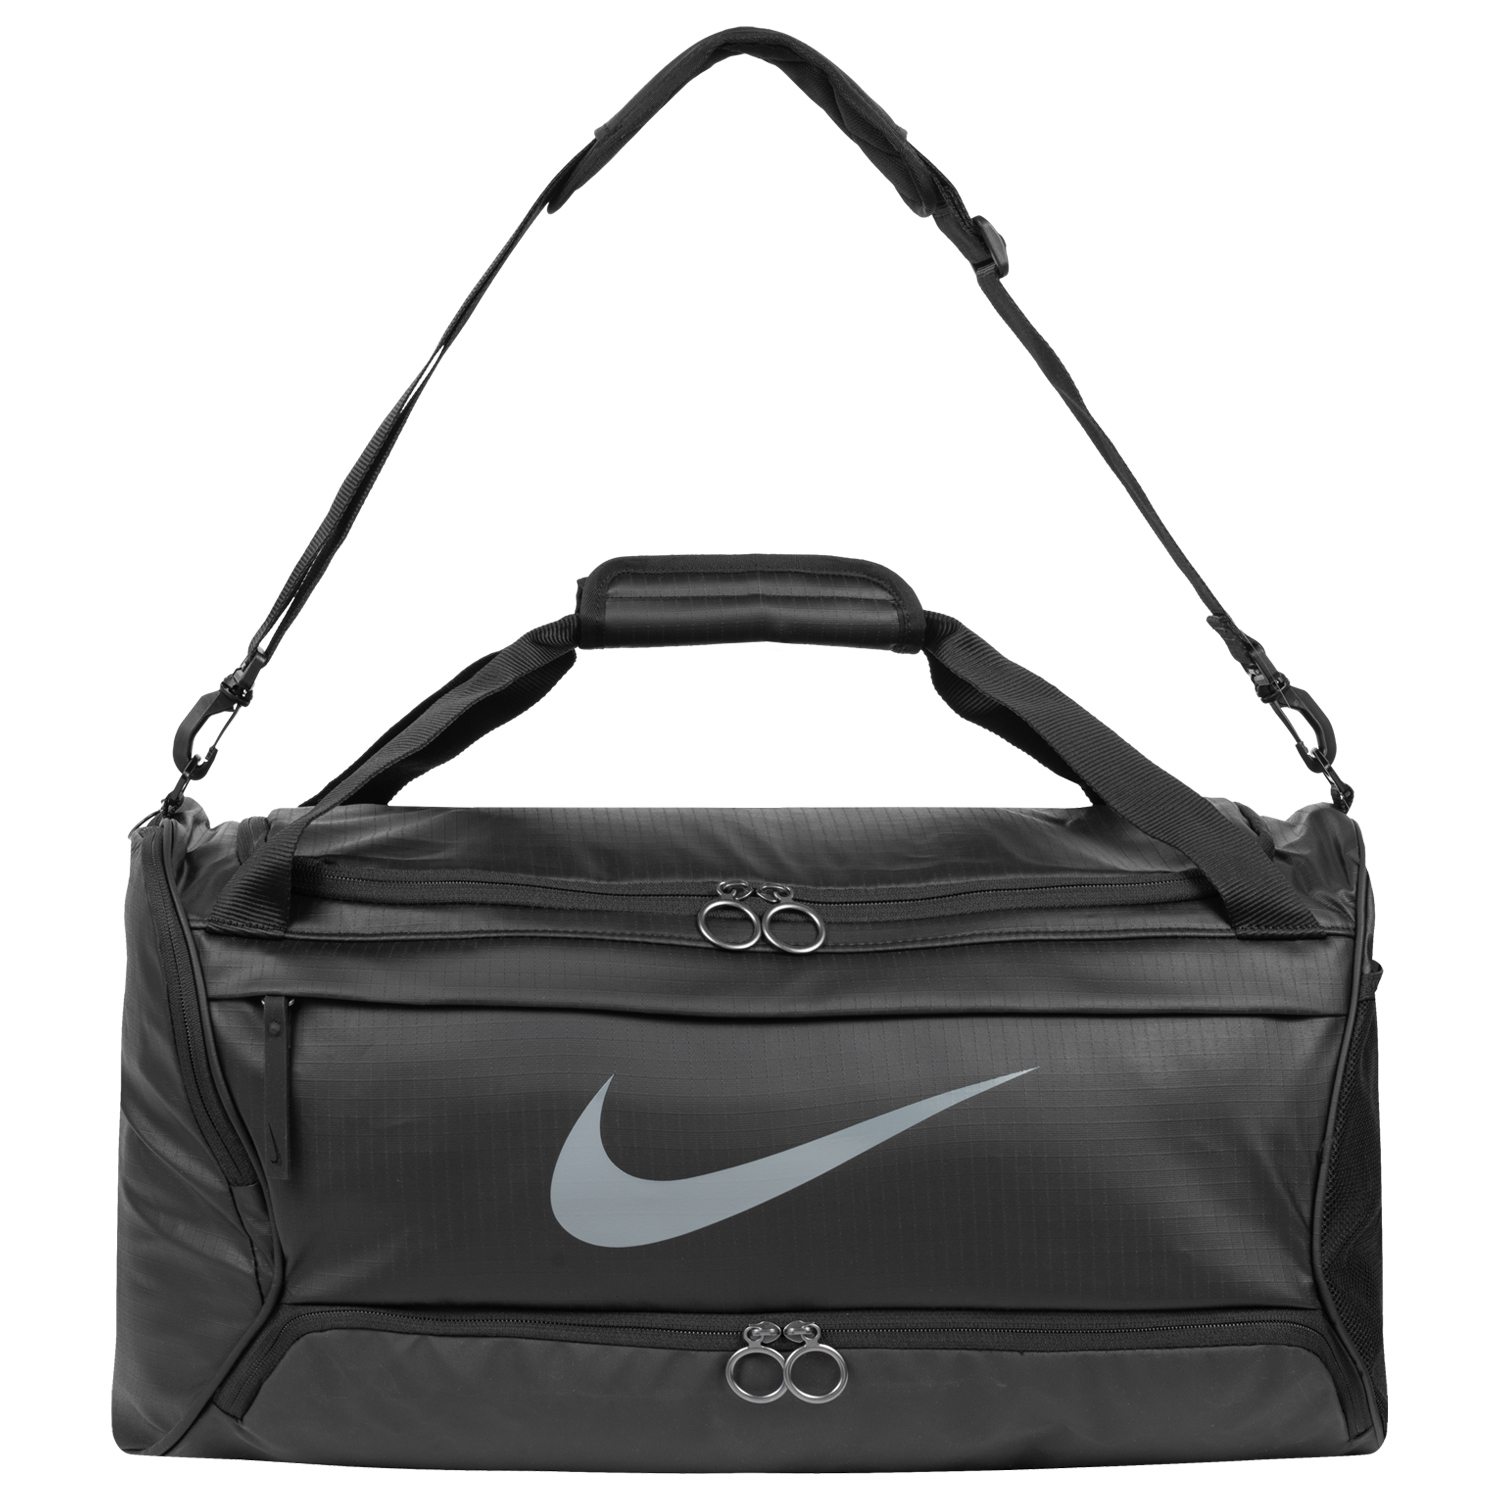 Bild 1: Nike Sporttasche New Eighties black